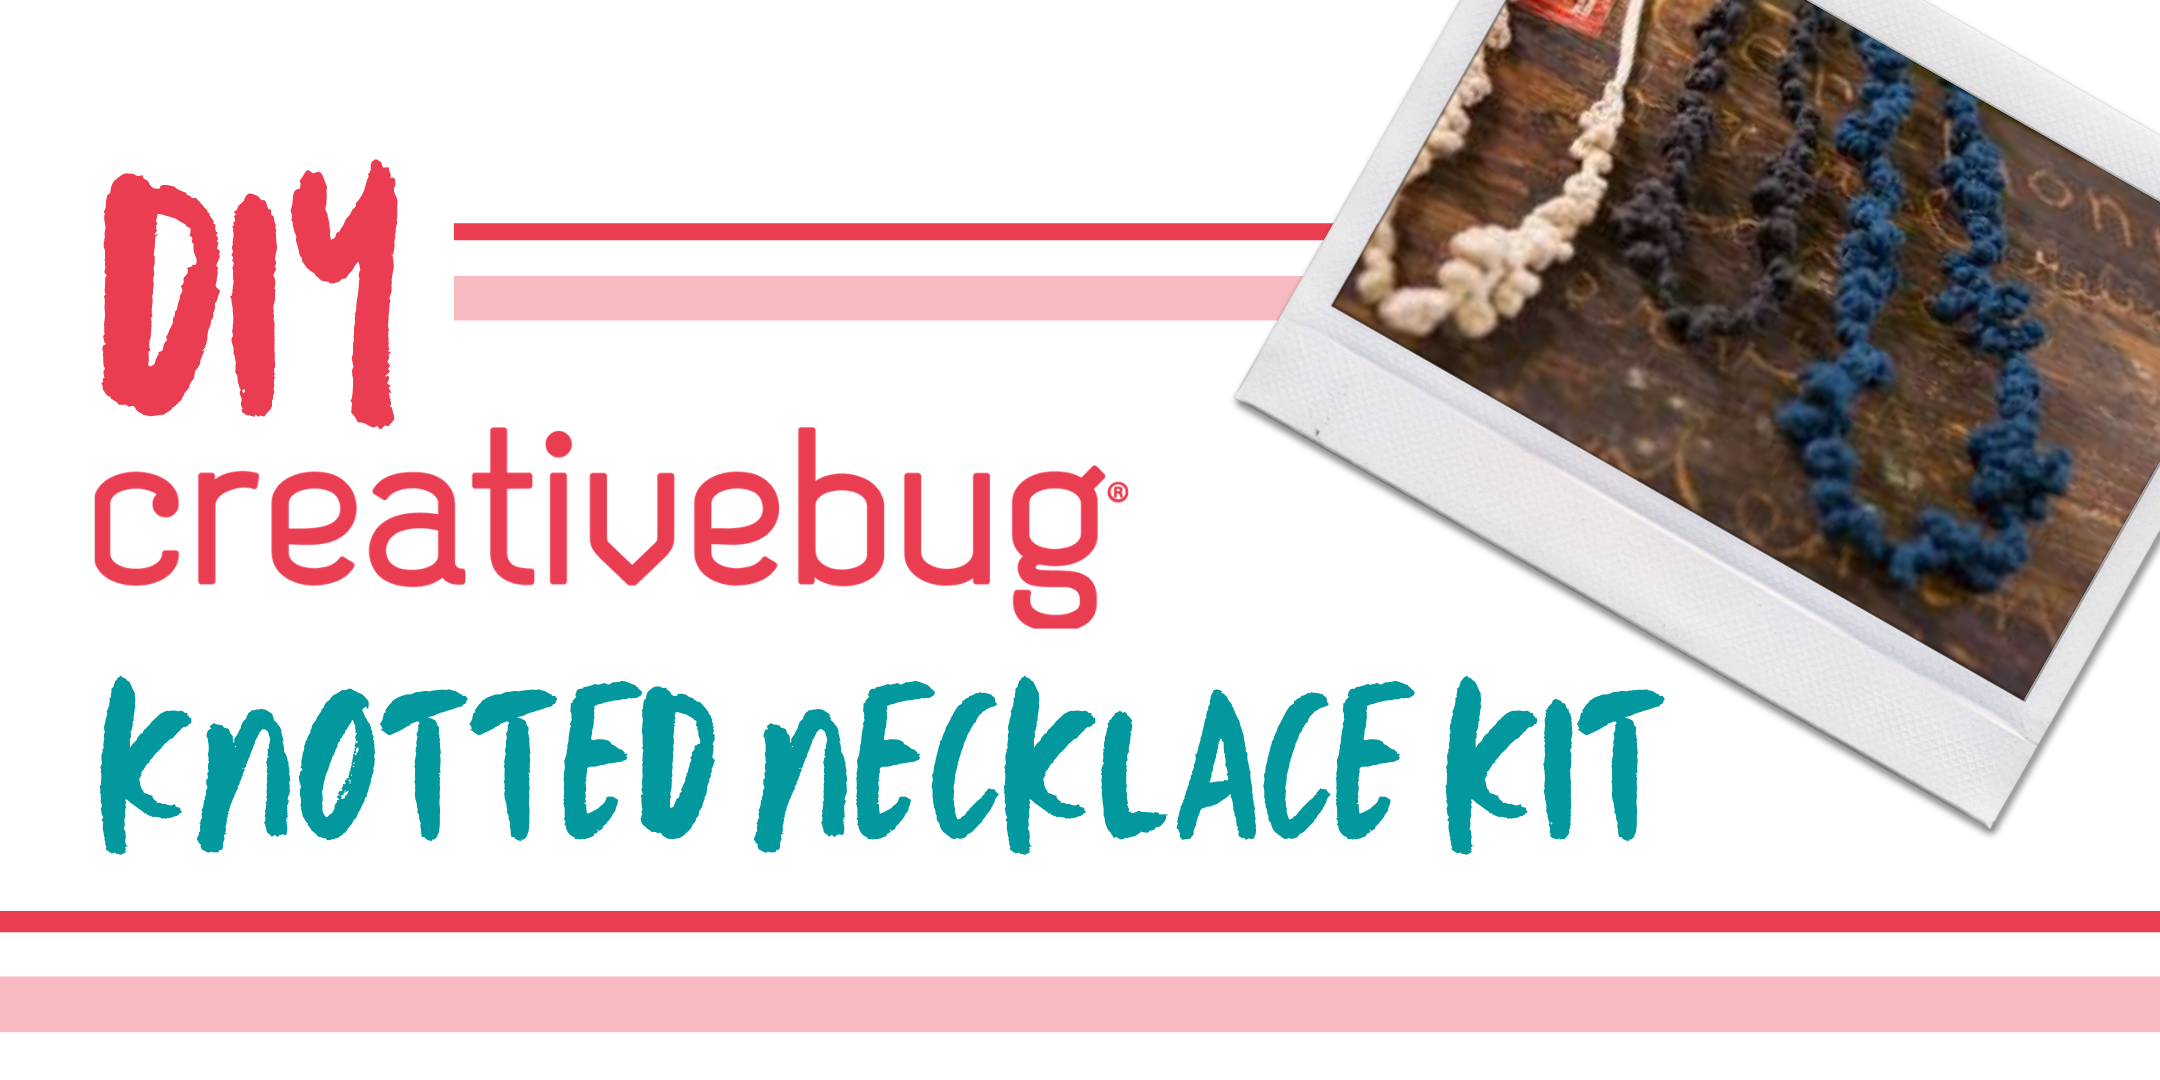 DIY Creativebug Knotted Necklace image